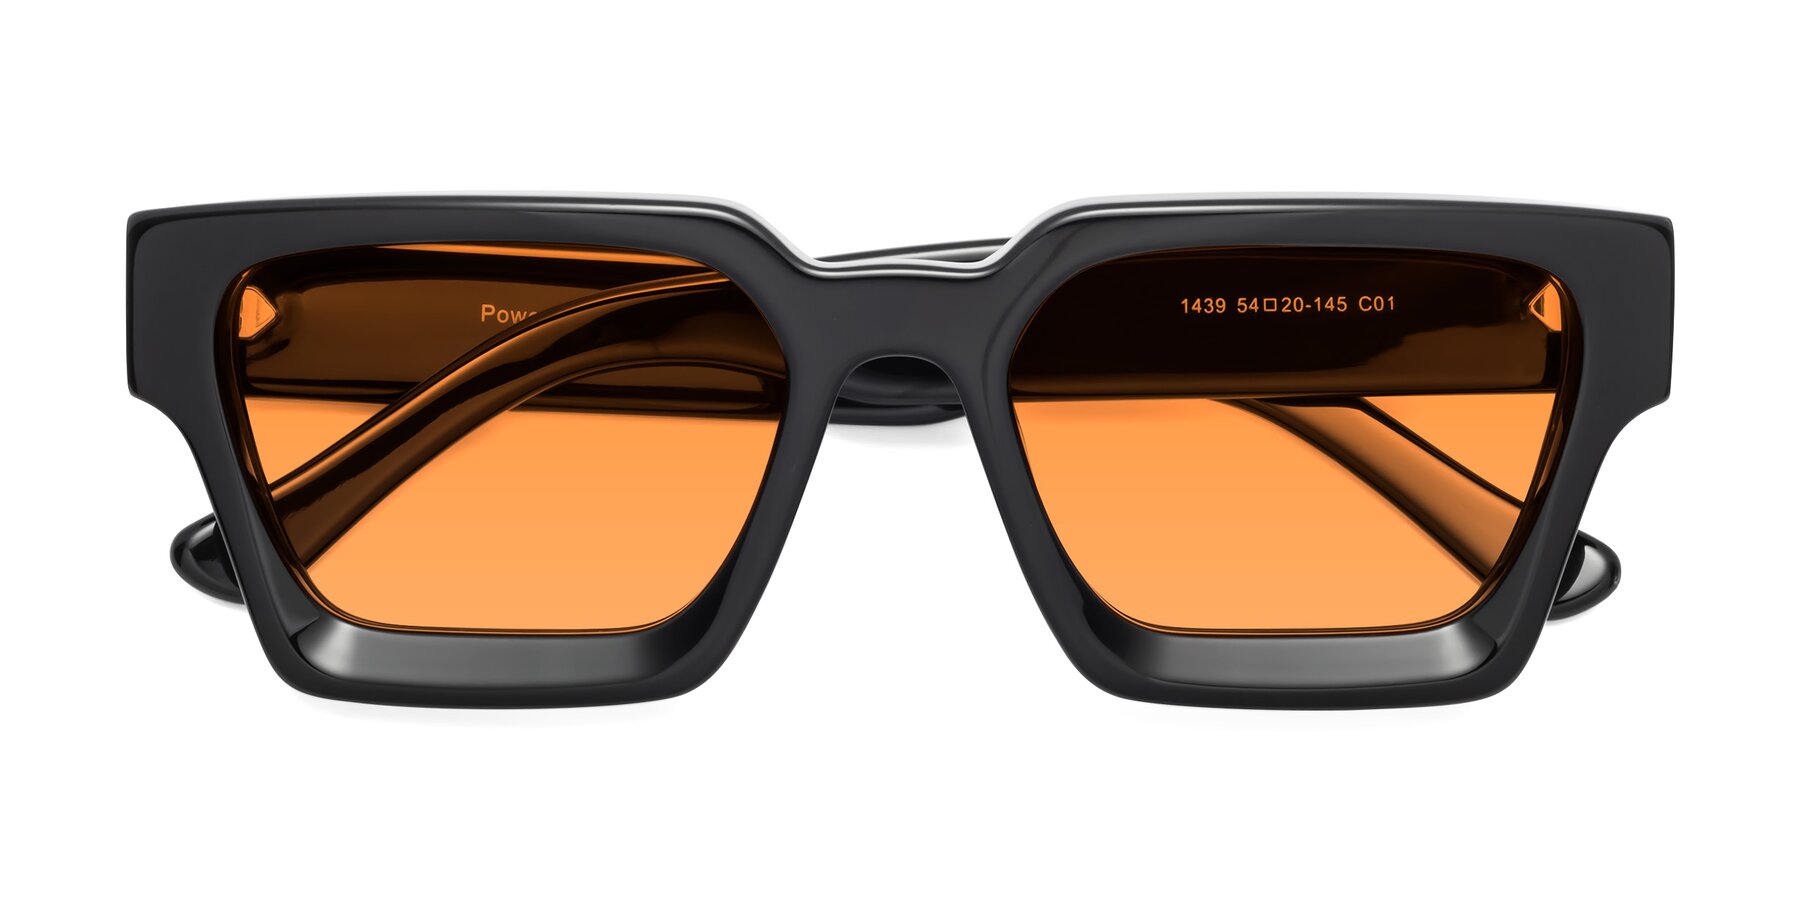 Lennon Style Sunglasses with Orange Lenses - Cosplay Sunglasses